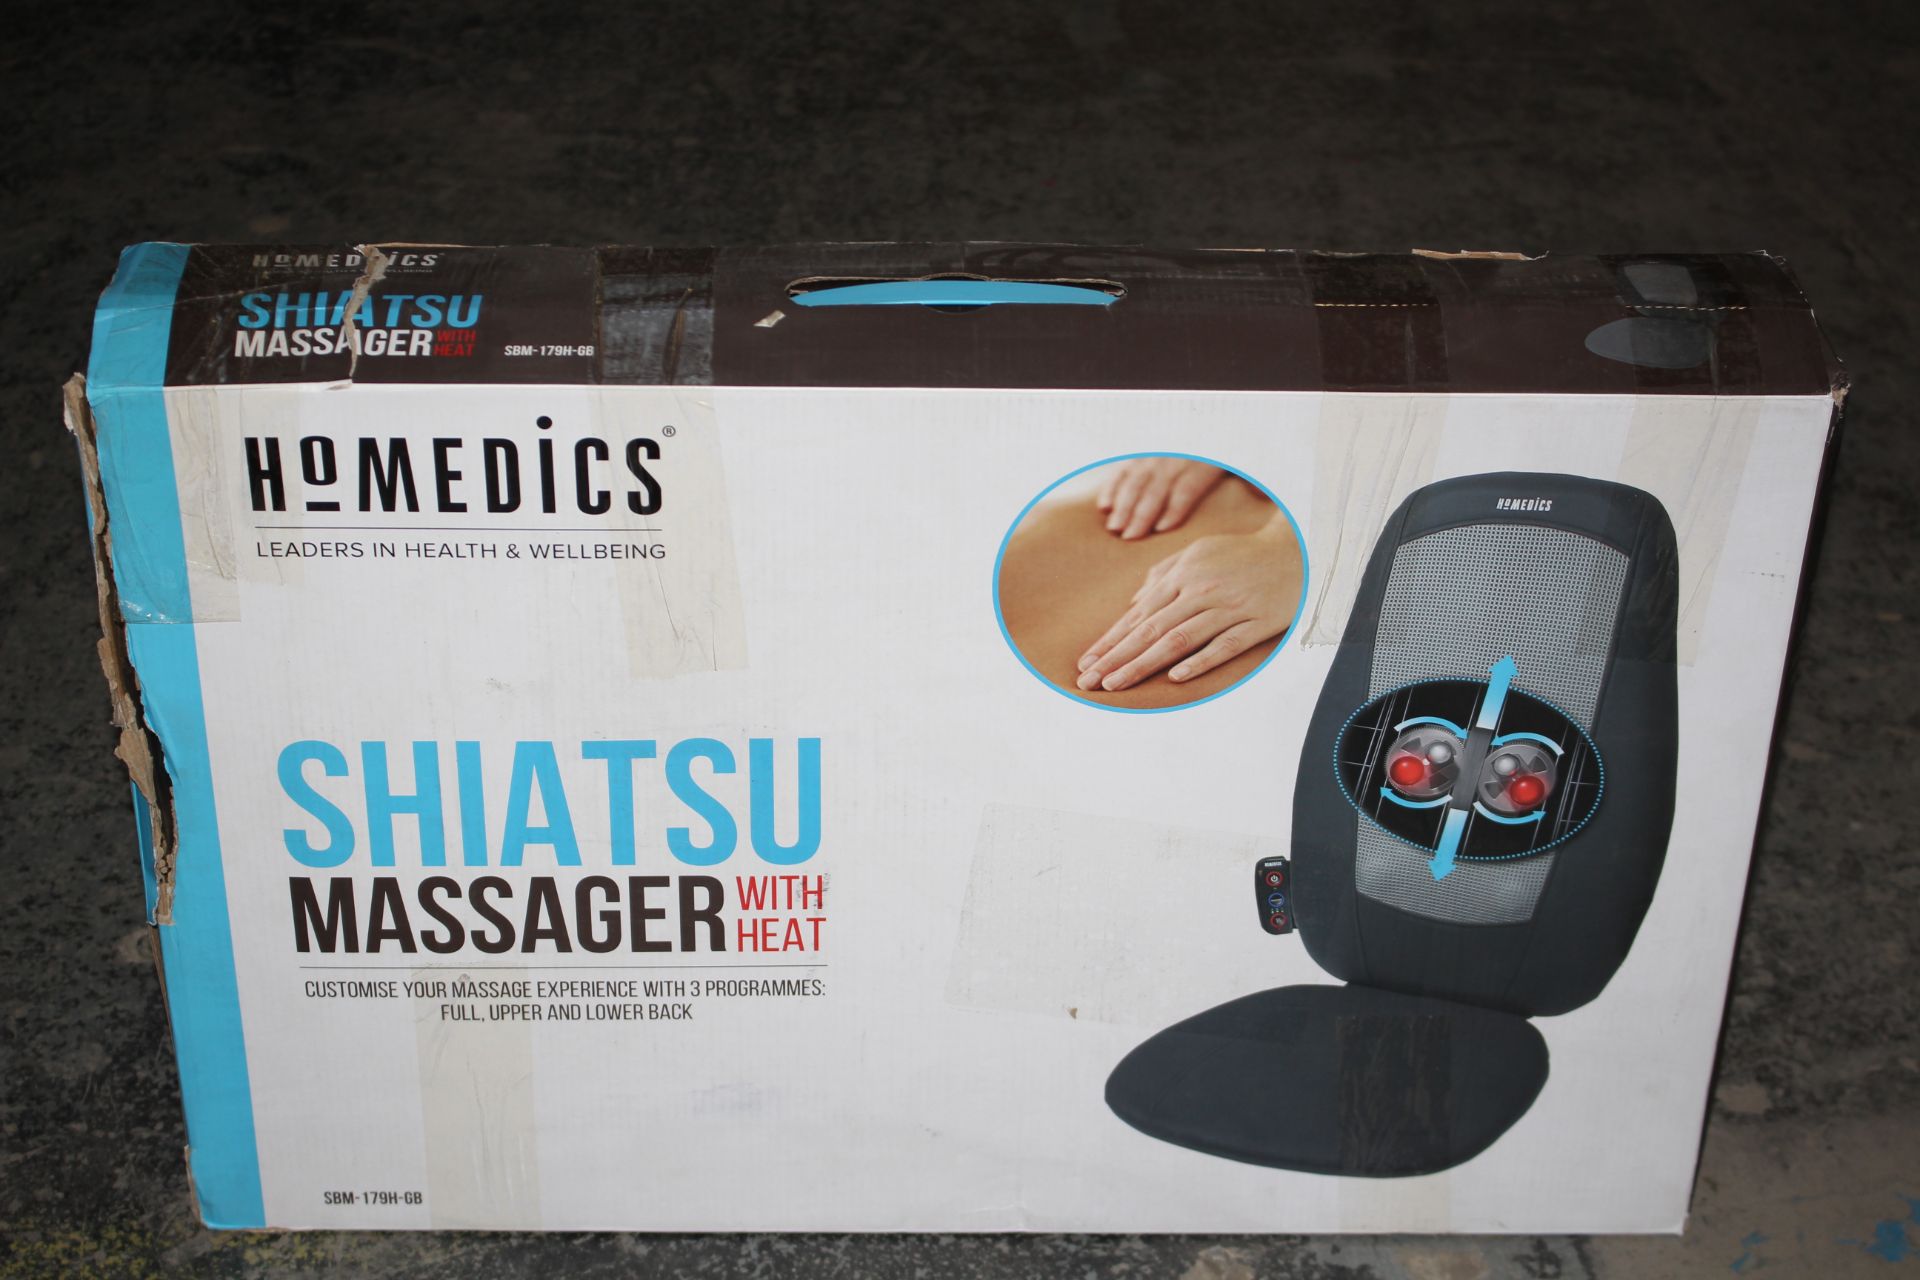 BOXED HOMEDICS SHIATSU MASSAGER WITH HEAT MODEL: SBM-179H-GB RRP £49.99Condition ReportAppraisal